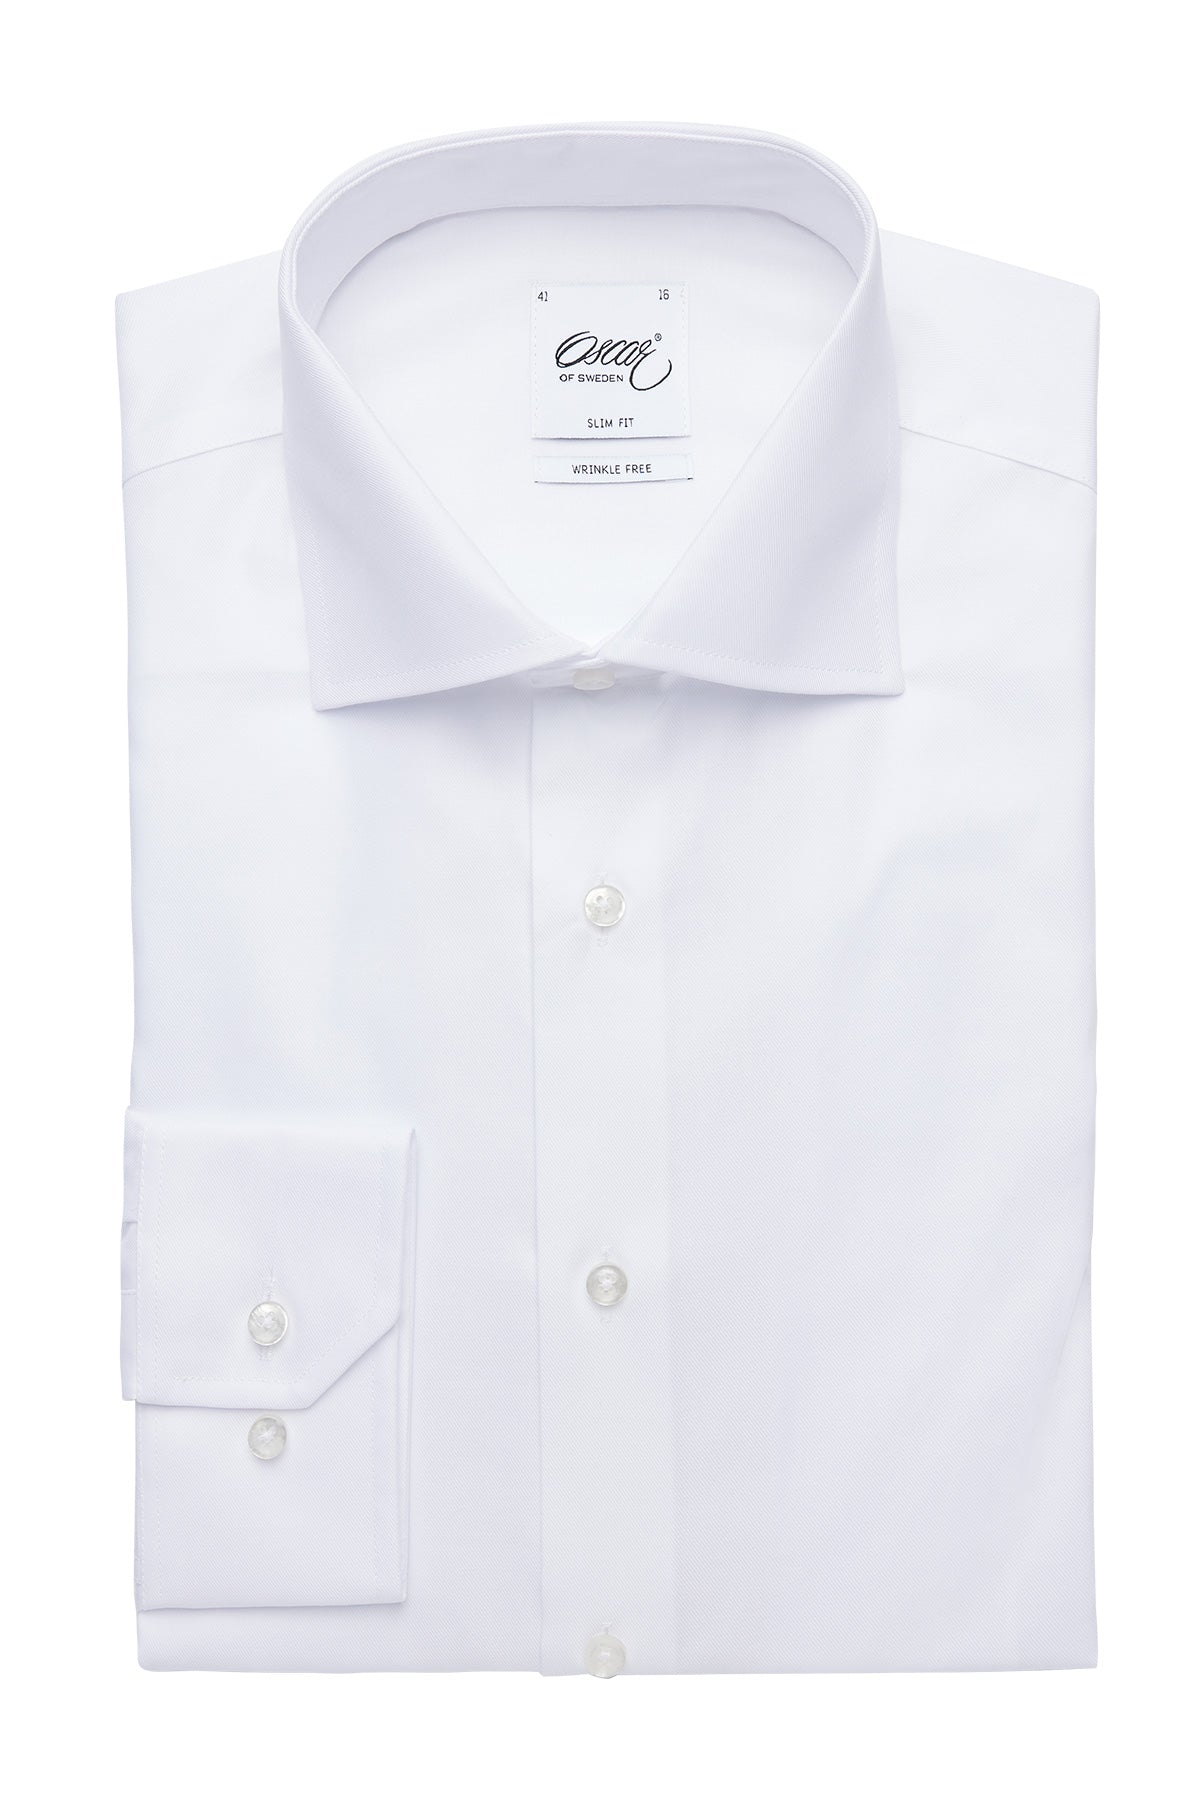 White wrinkle free slim fit shirt